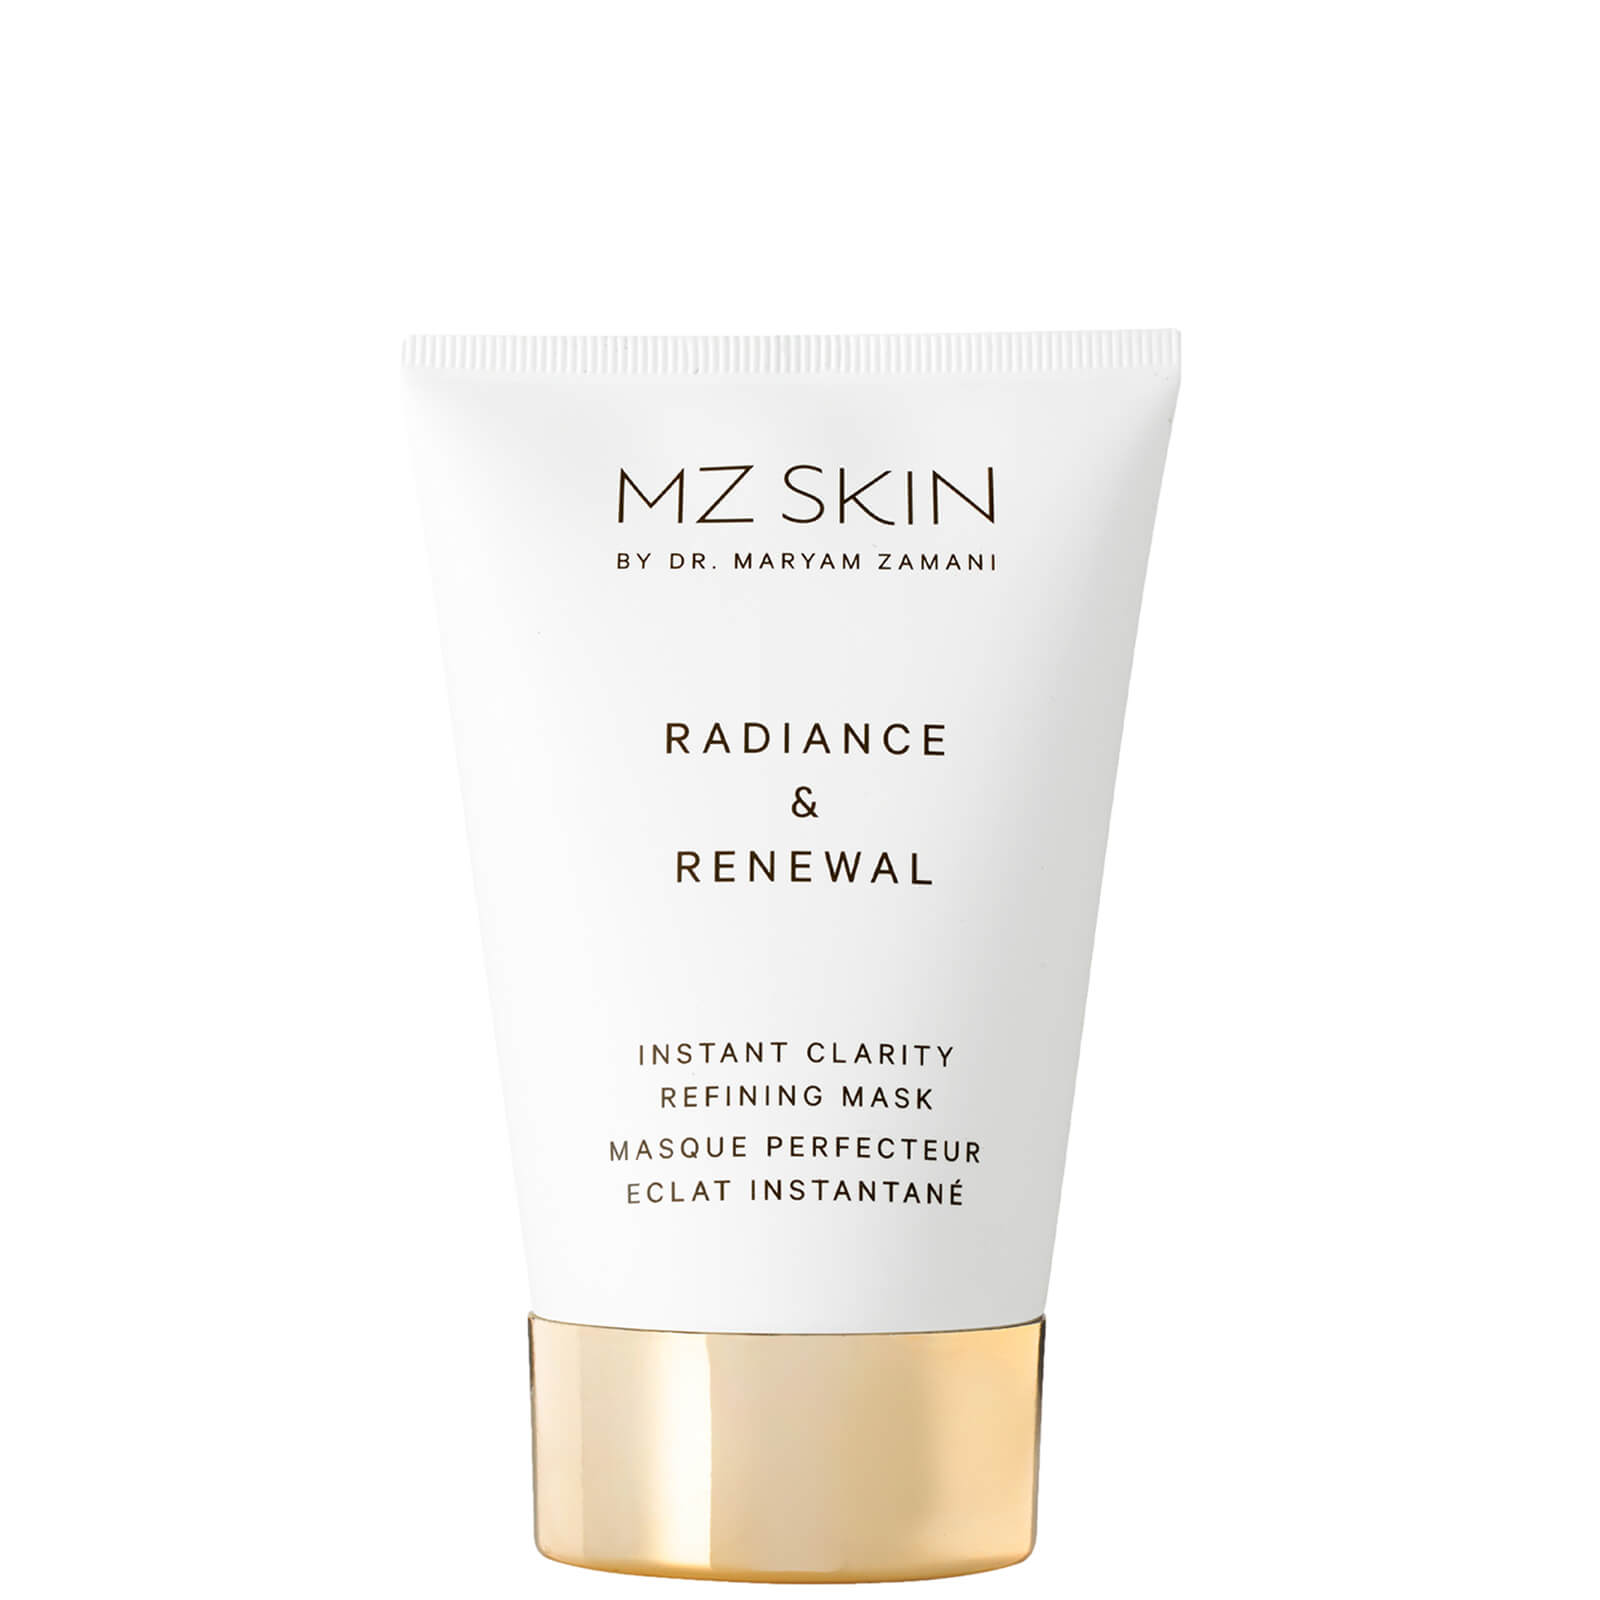 Mz Skin Radiance & Renewal Instant Clarity Refining Mask 100ml